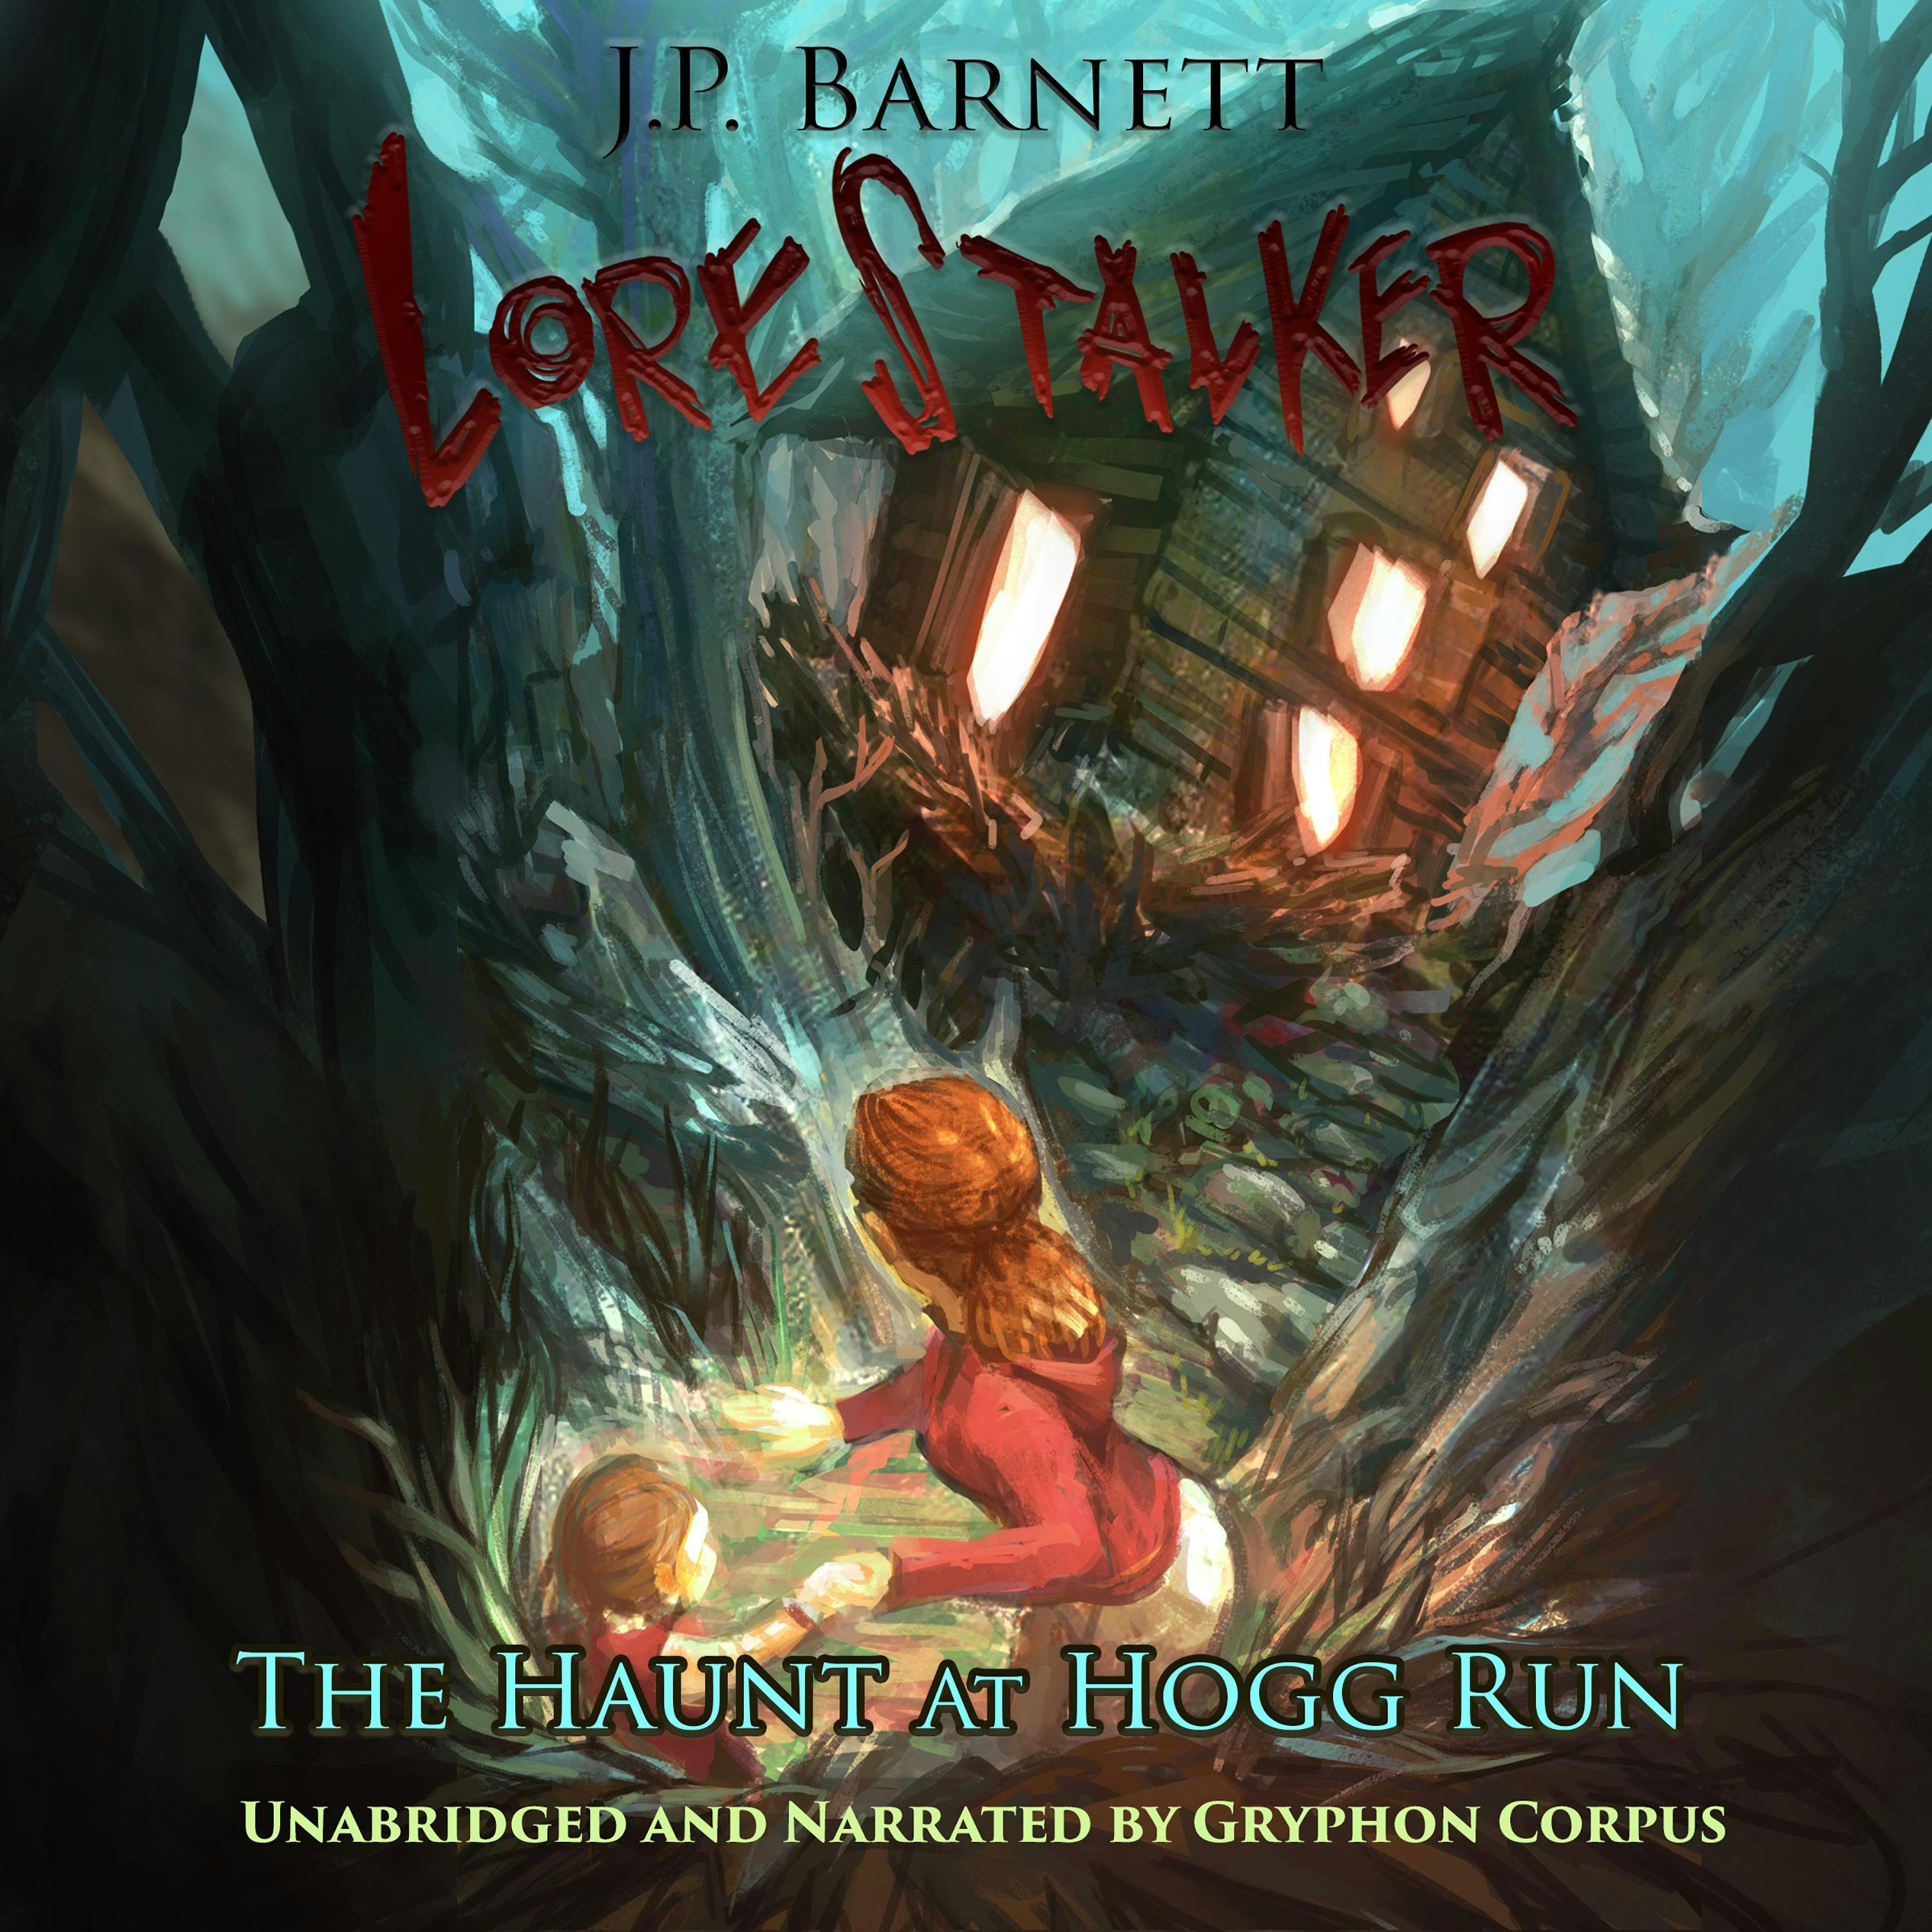 The Haunt at Hogg Run: A Creature Feature Horror Suspense - J.P. Barnett